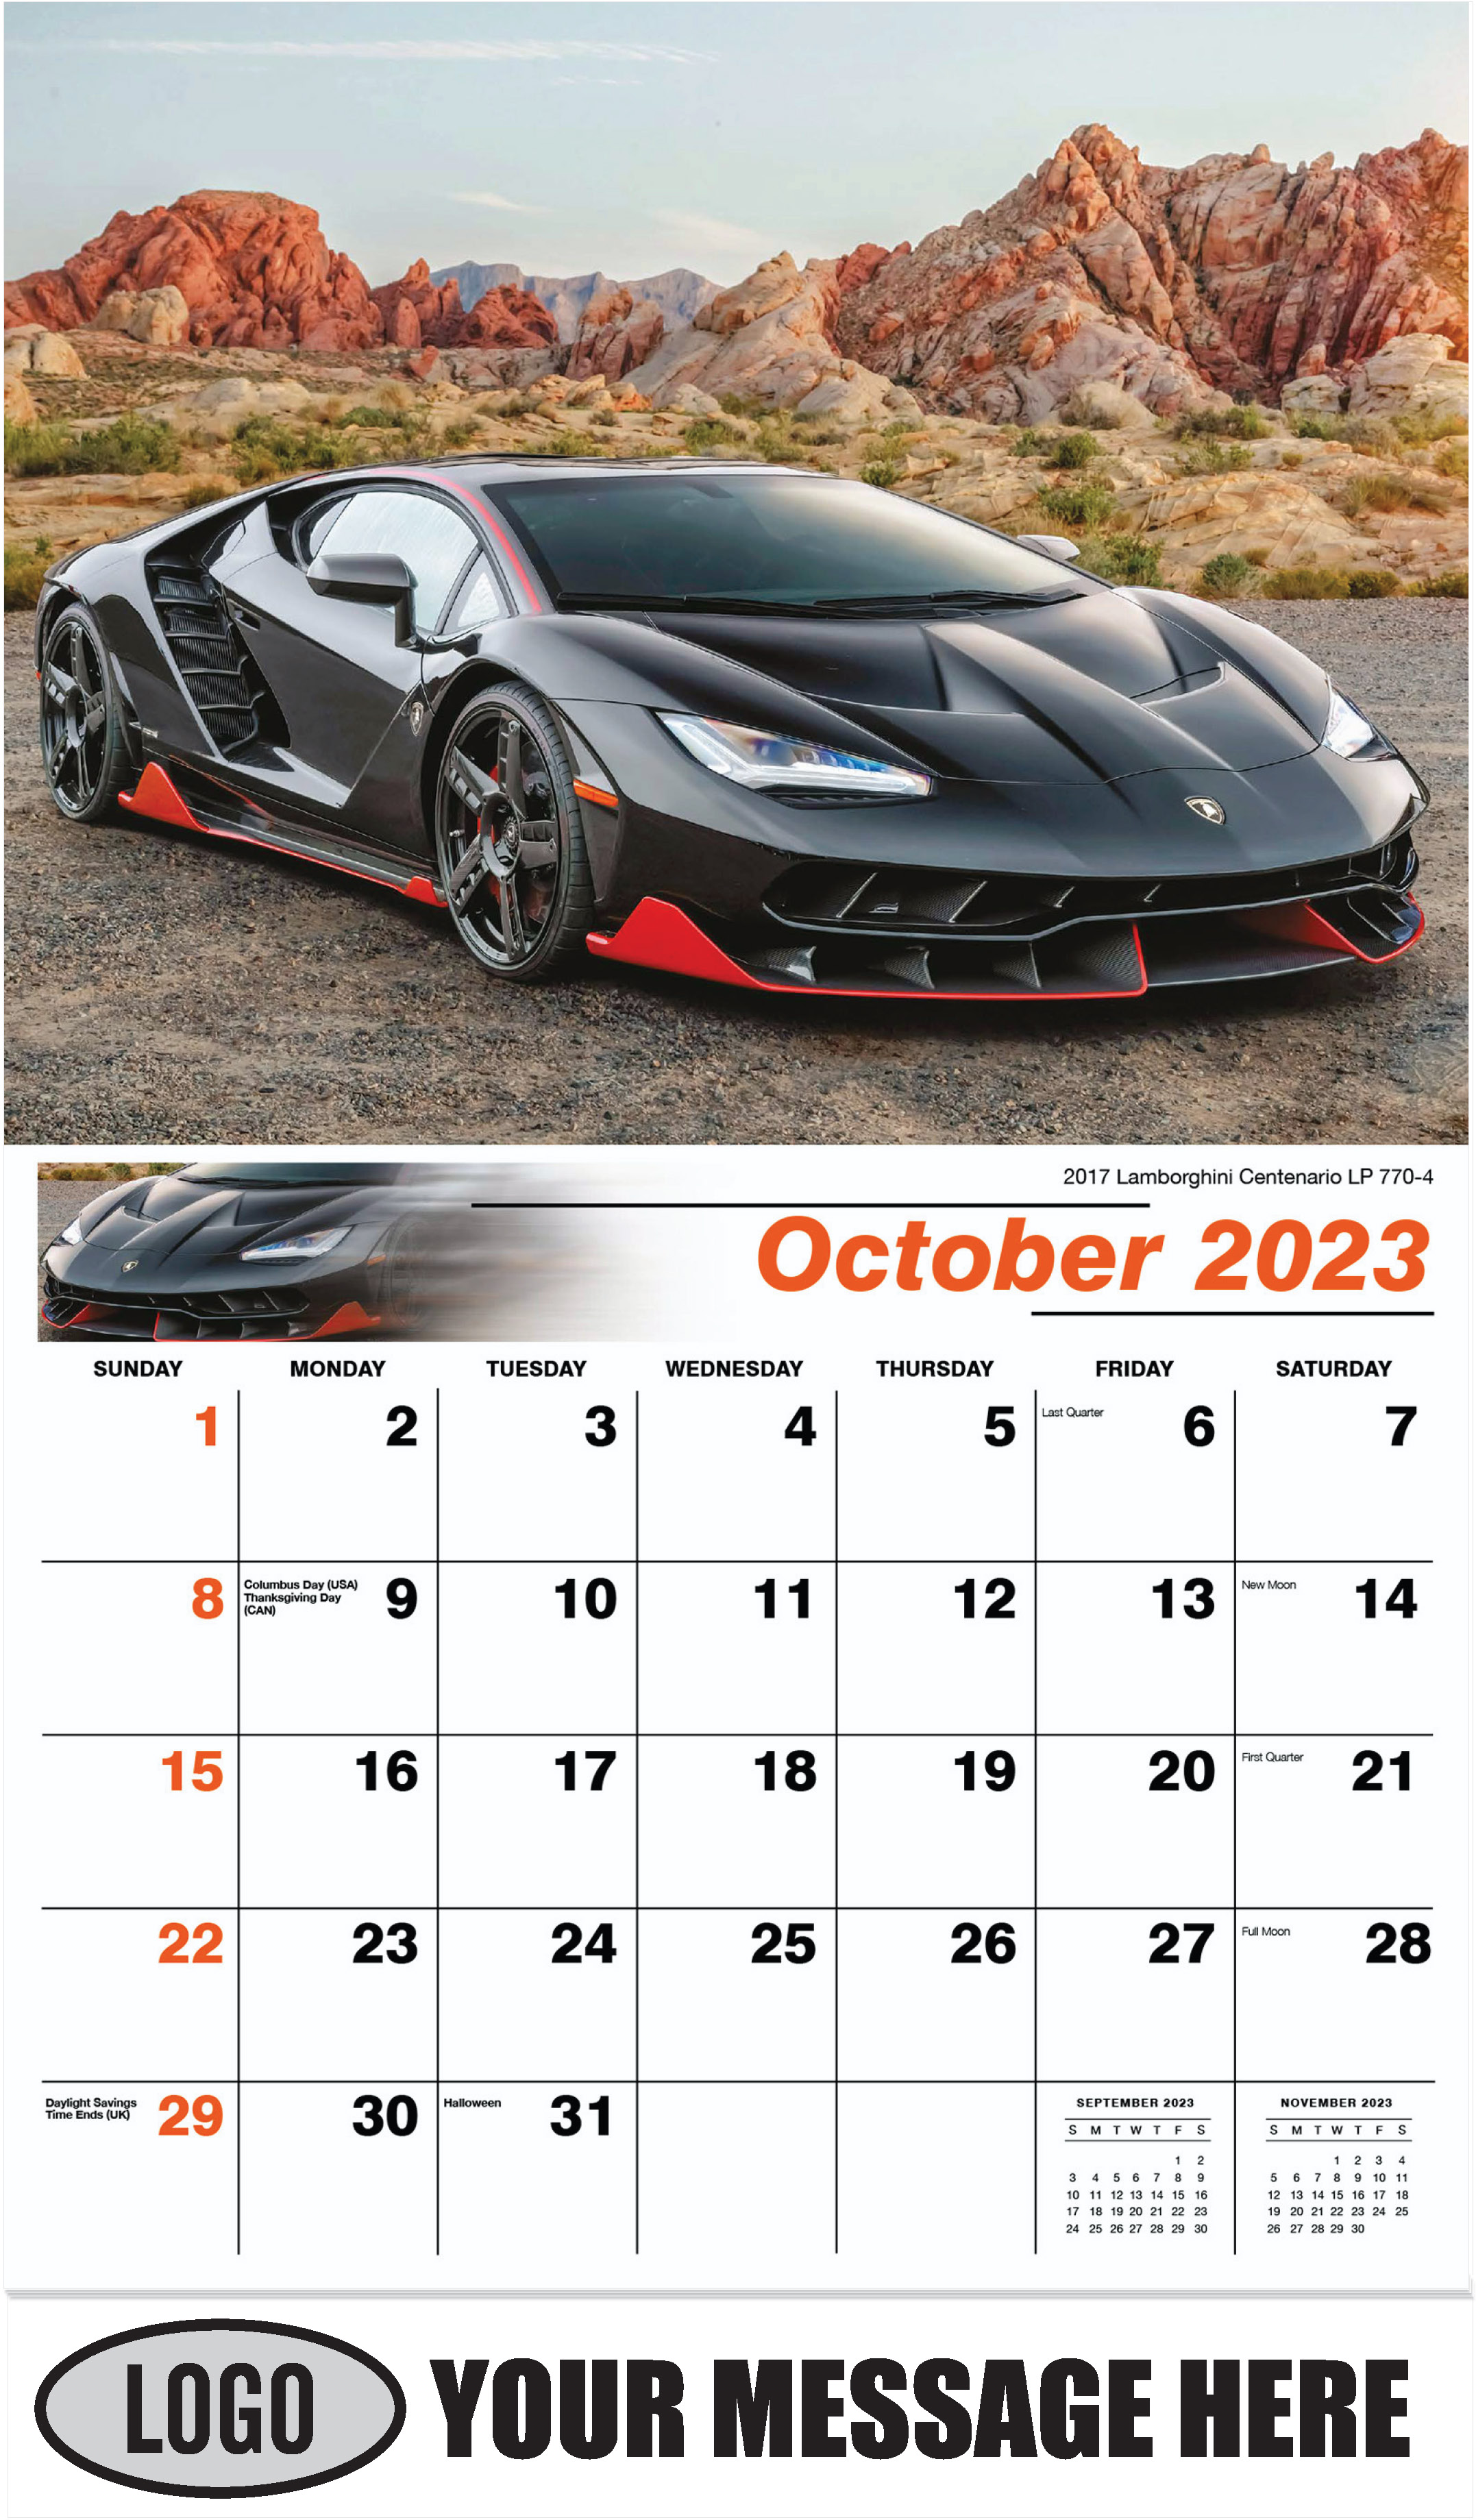 2017 Lamborghini Centenario LP 770-4 - October - Exotic Cars 2023 Promotional Calendar